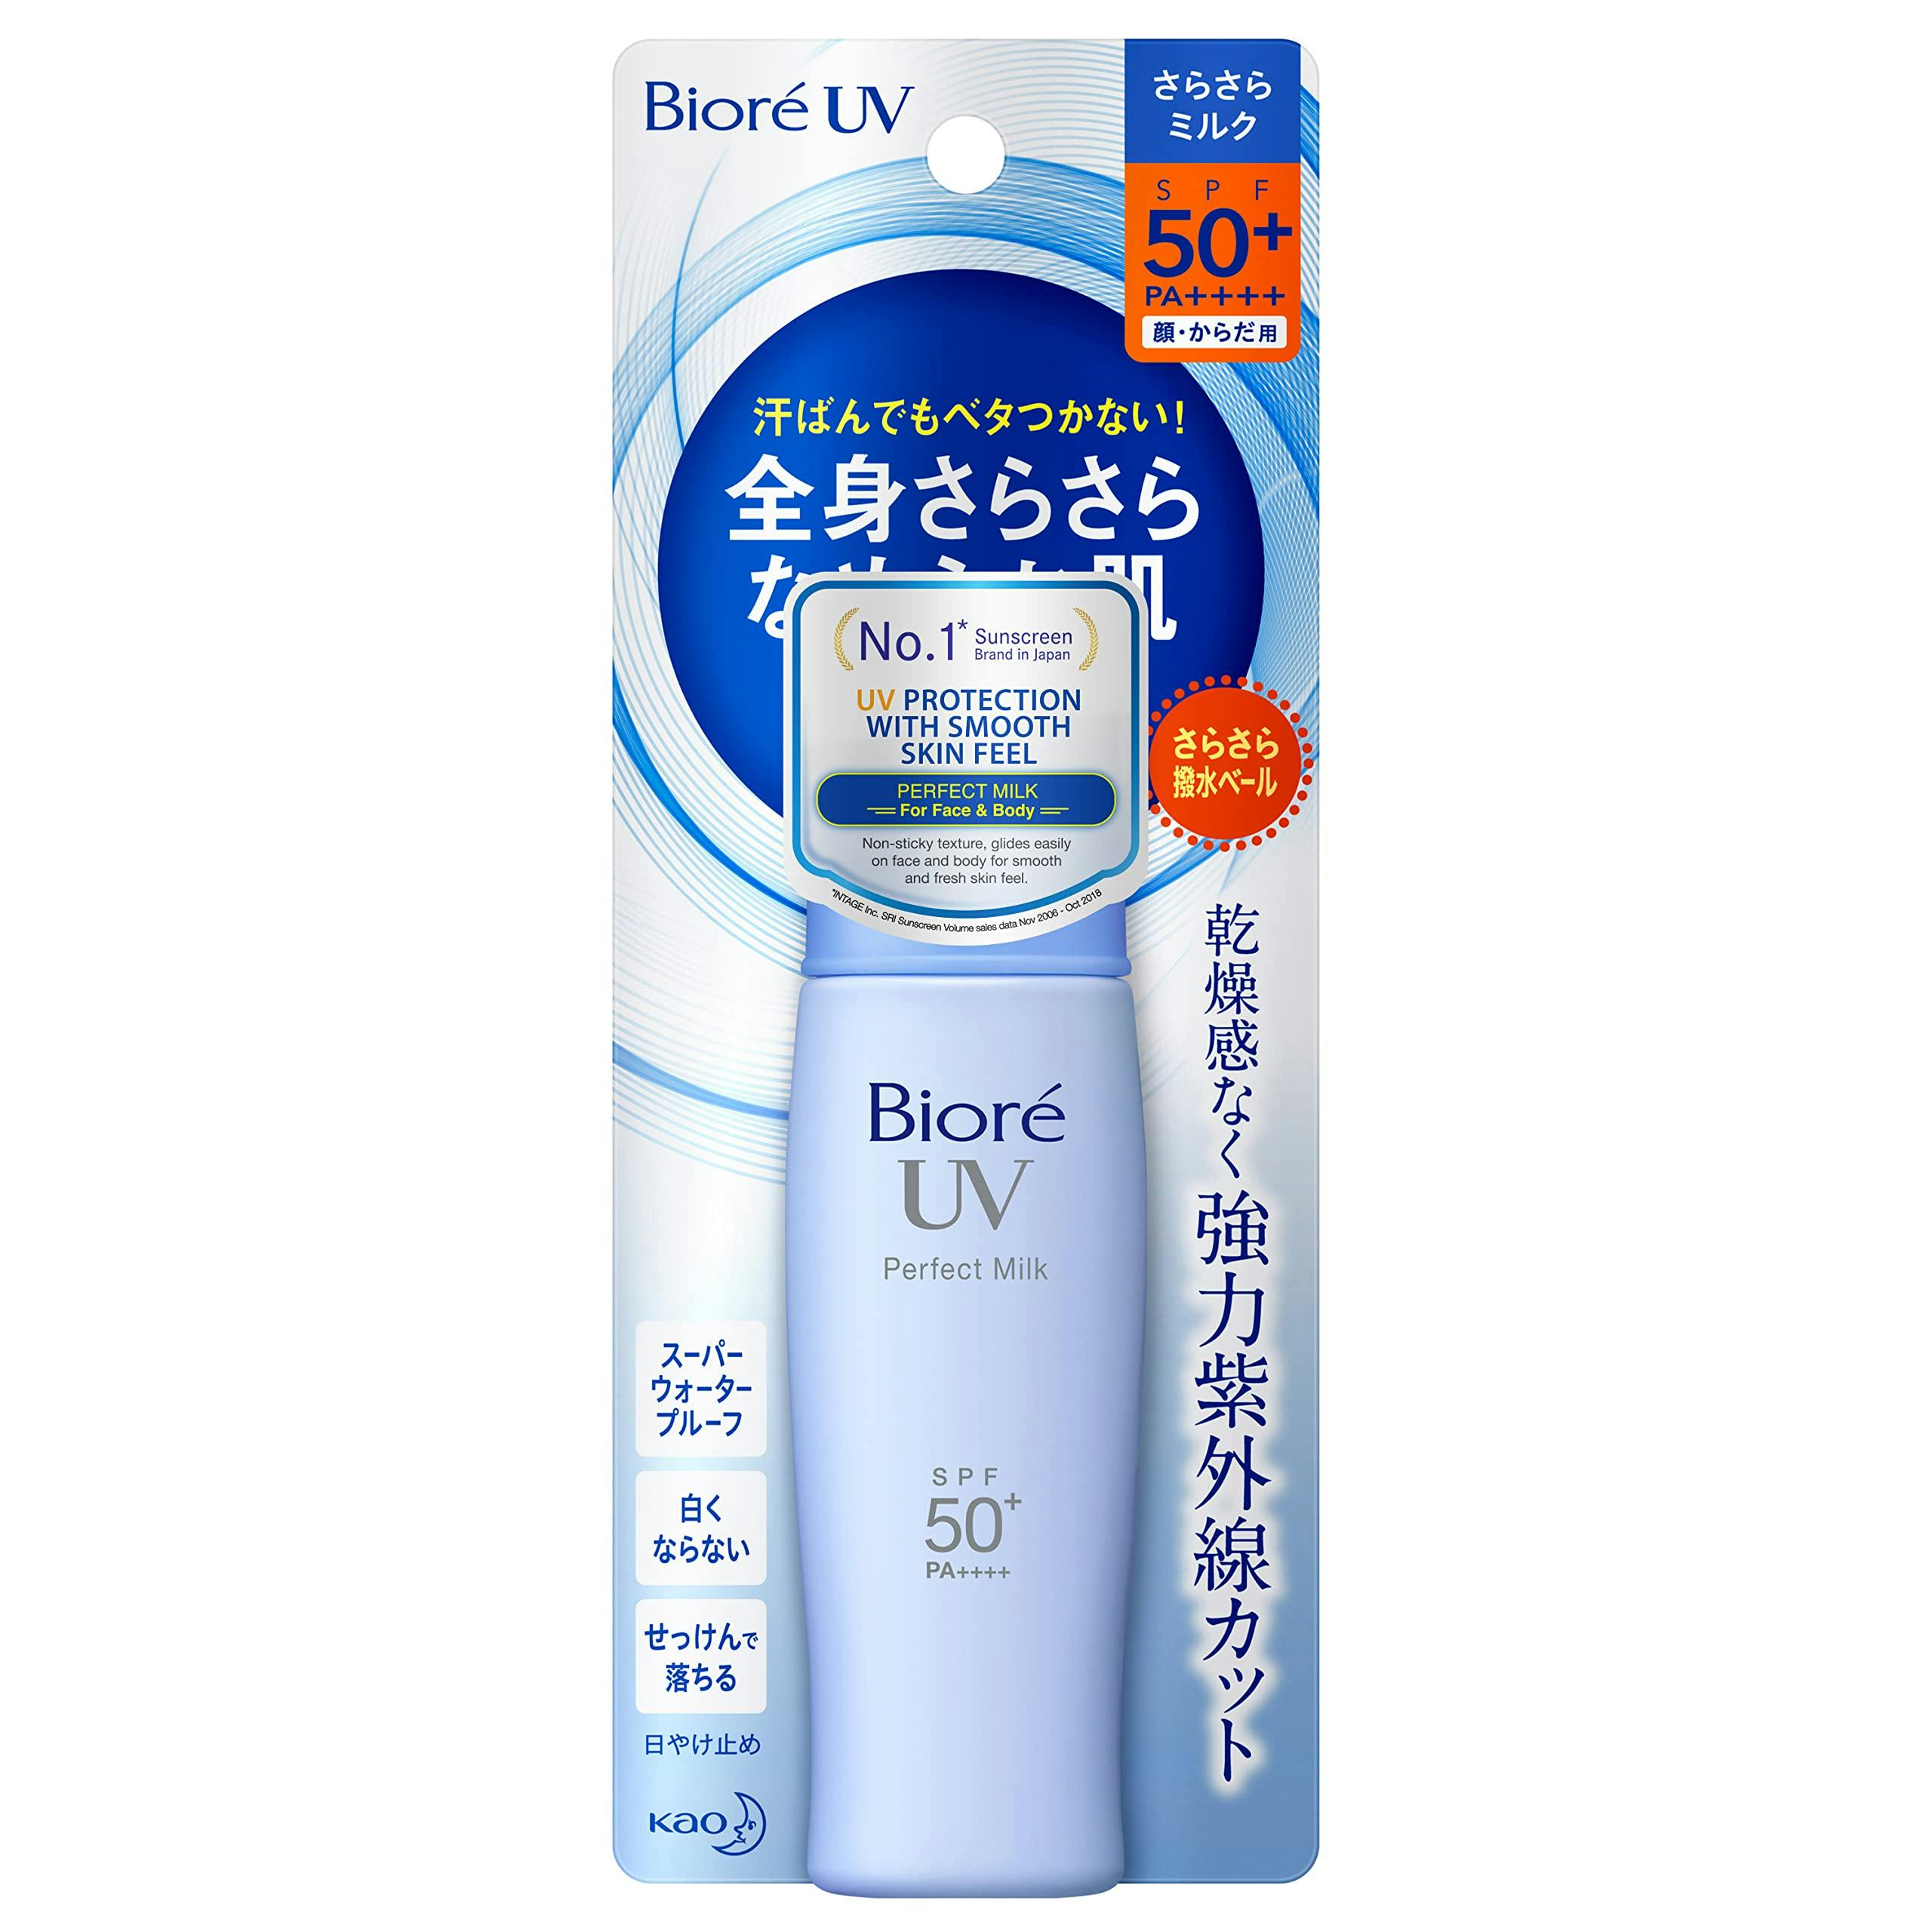 Kao Biore UV PERFECT Milk SPF50+ PA++++ Матувальне сонцезахисне молочко